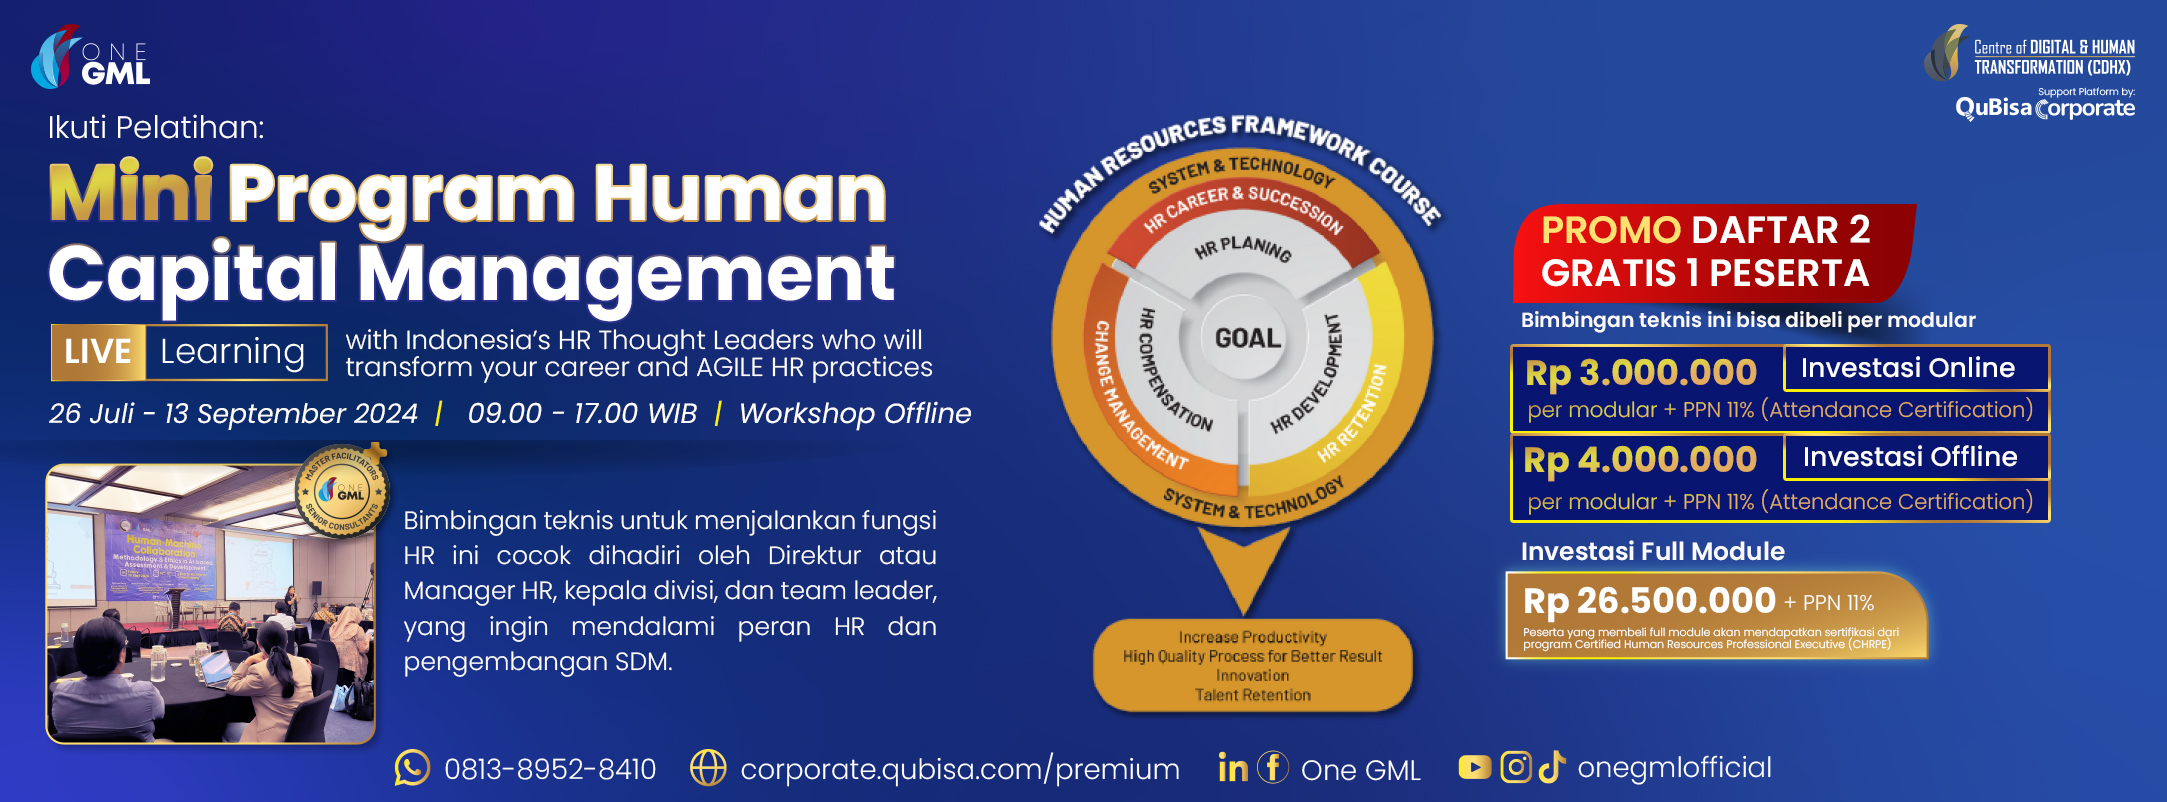 06. Mini Program Human Capital Management LANDSCAPE.jpg